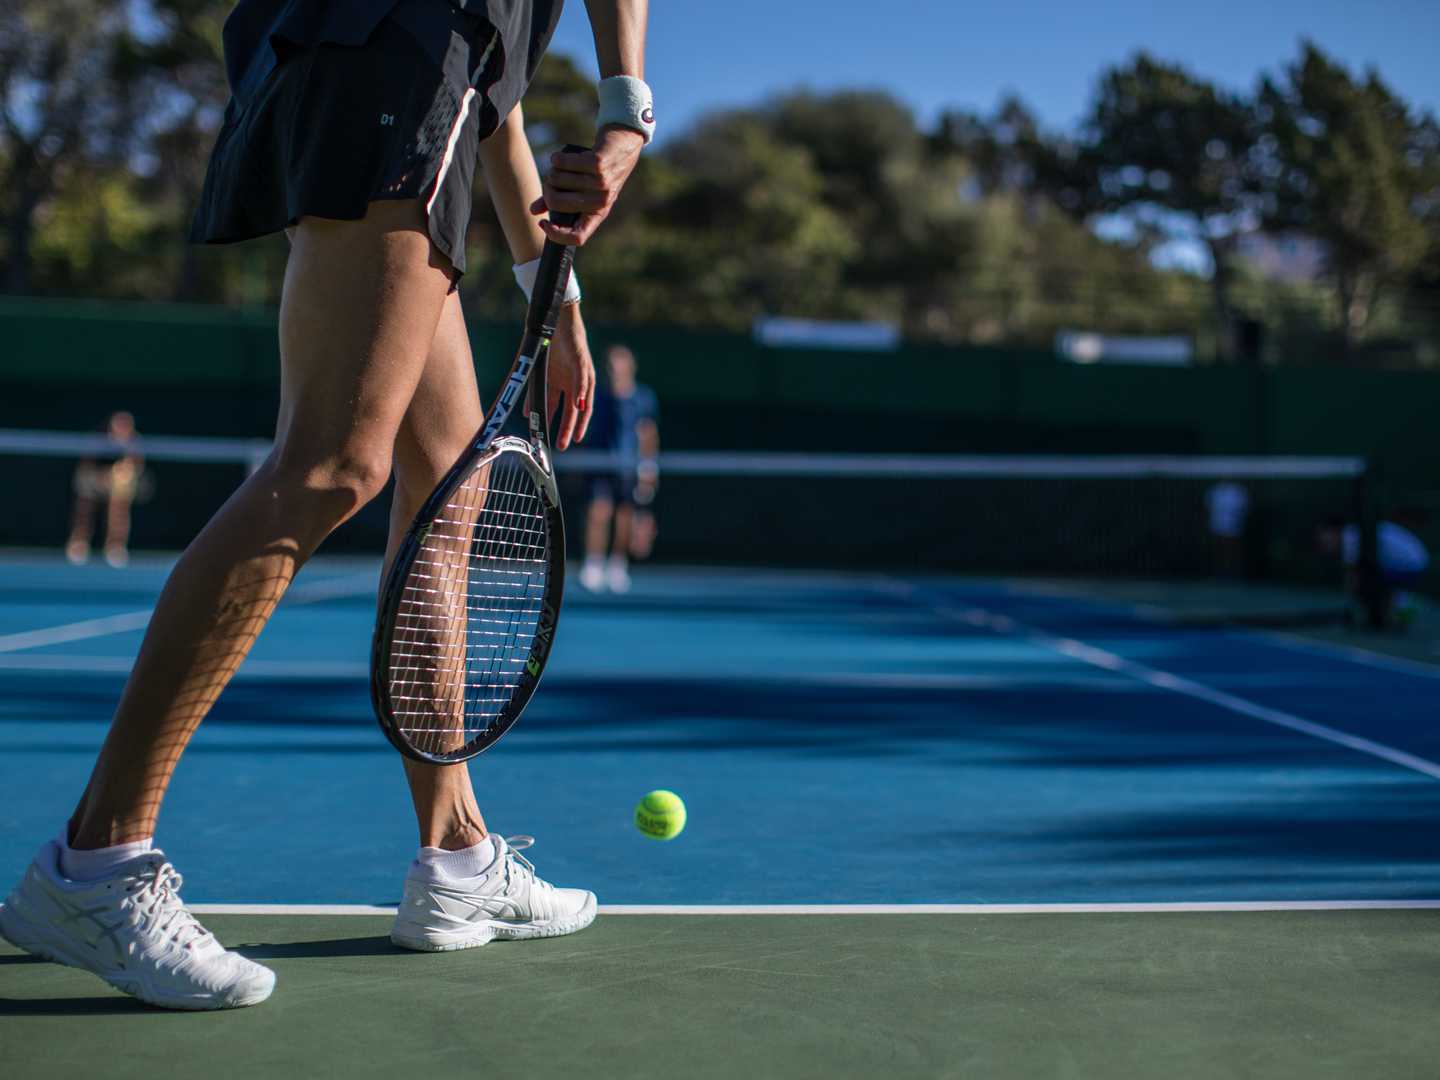 SHE_OLBSI_Activities_Tennis_Court (1).jpg